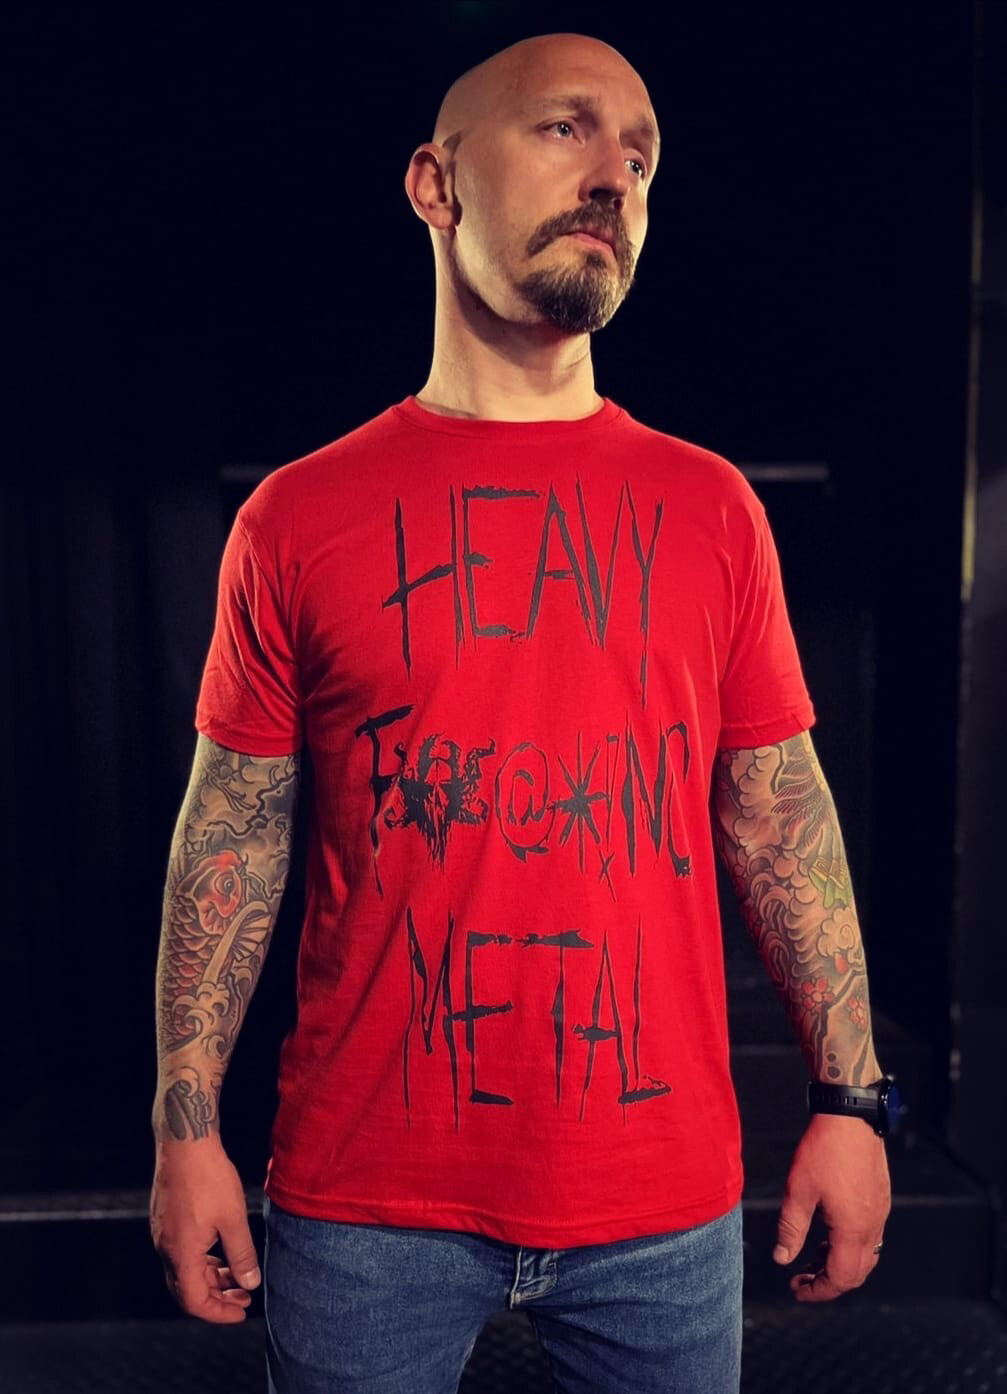 Heavy %*@! Metal T-shirt (Red)